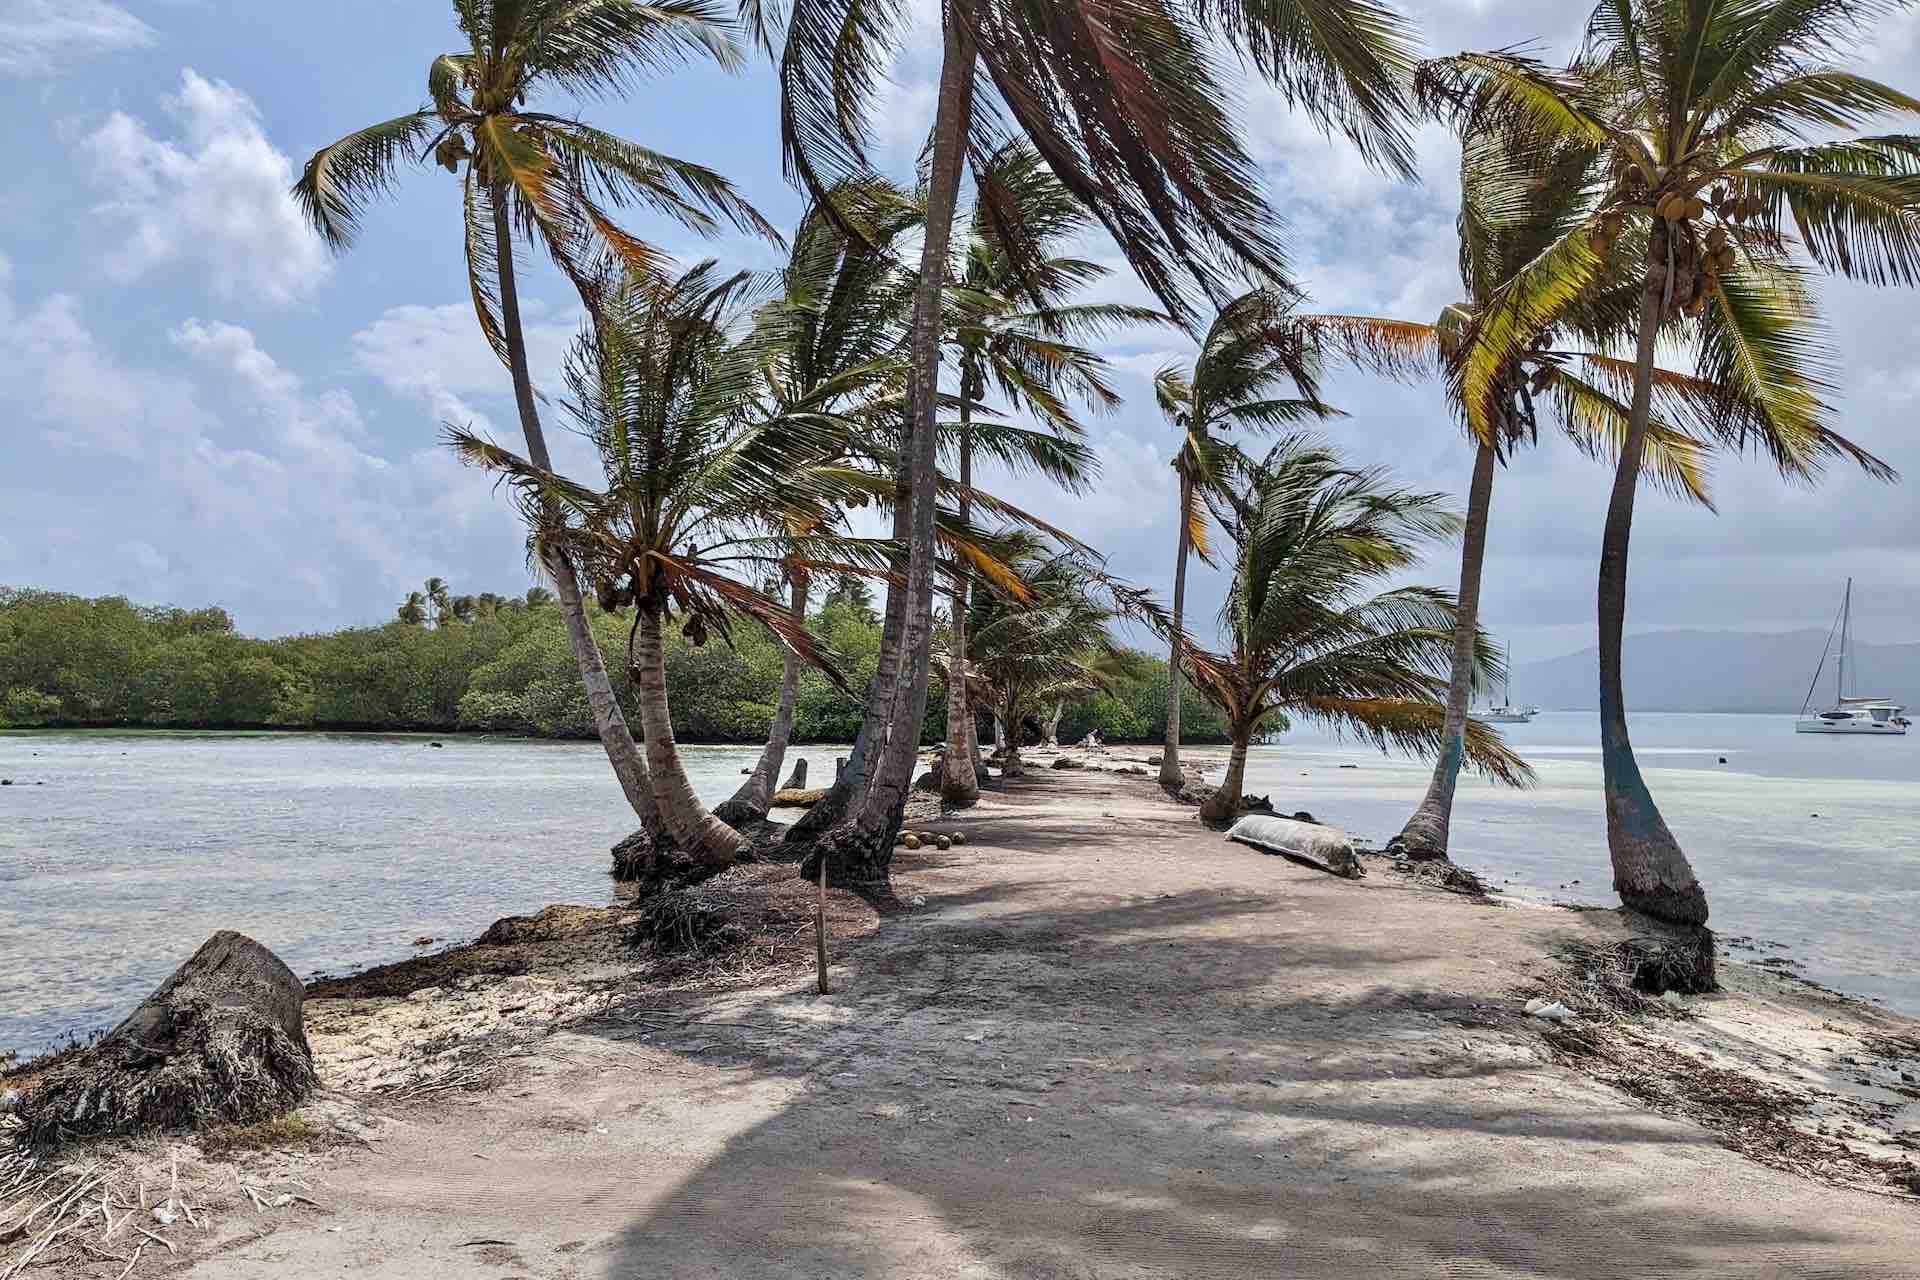 Isla Miryadup San Blas vacation island private cabins beach path